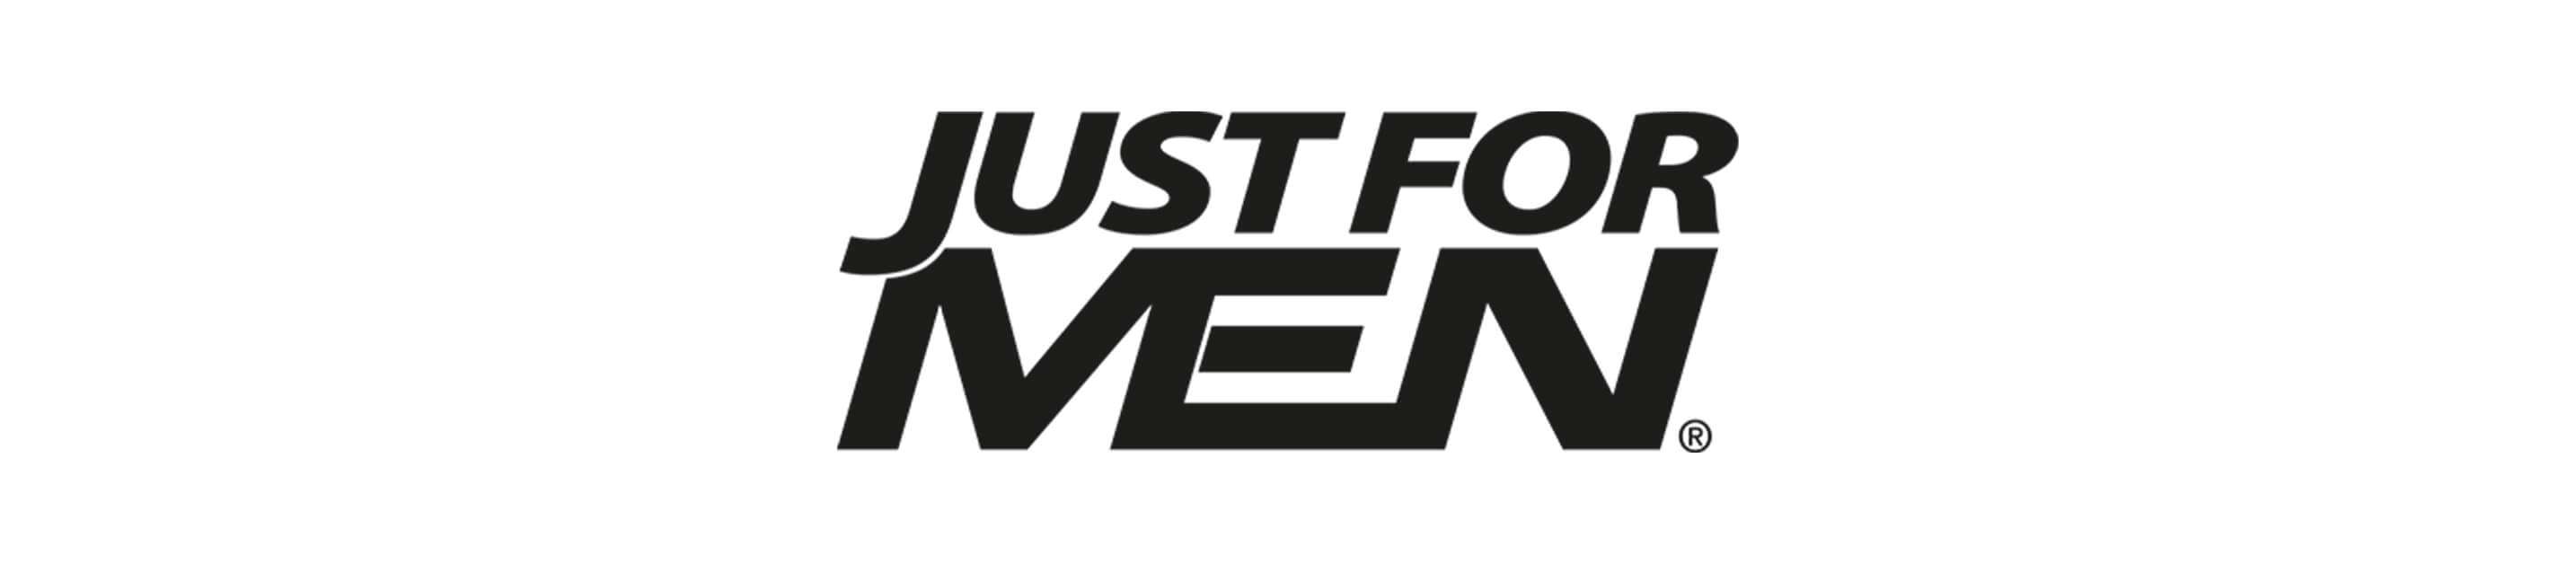 Just-F-Men